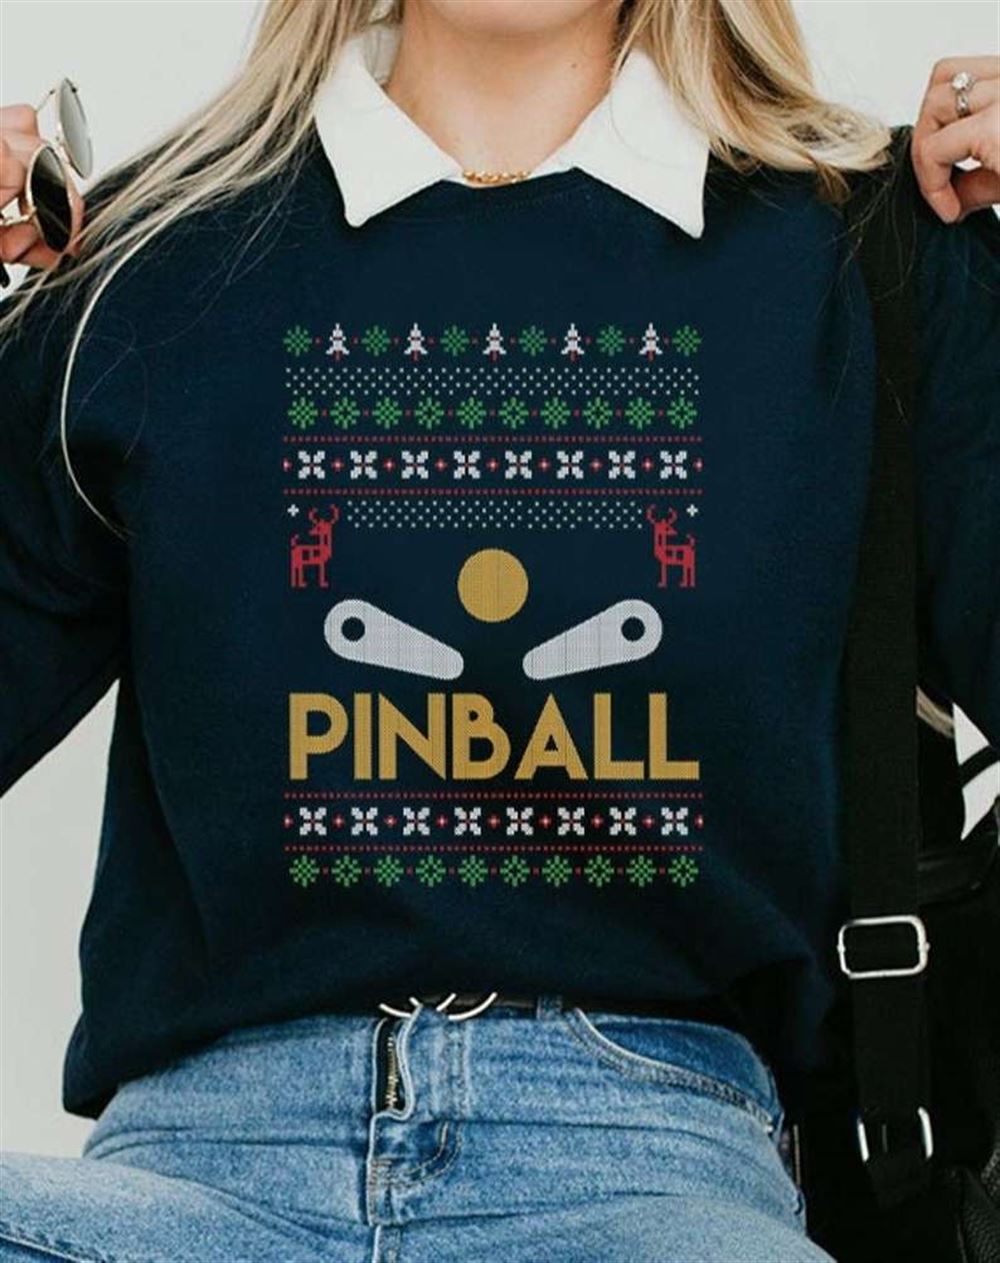 Arcade Pinball Video Game Design Shirt